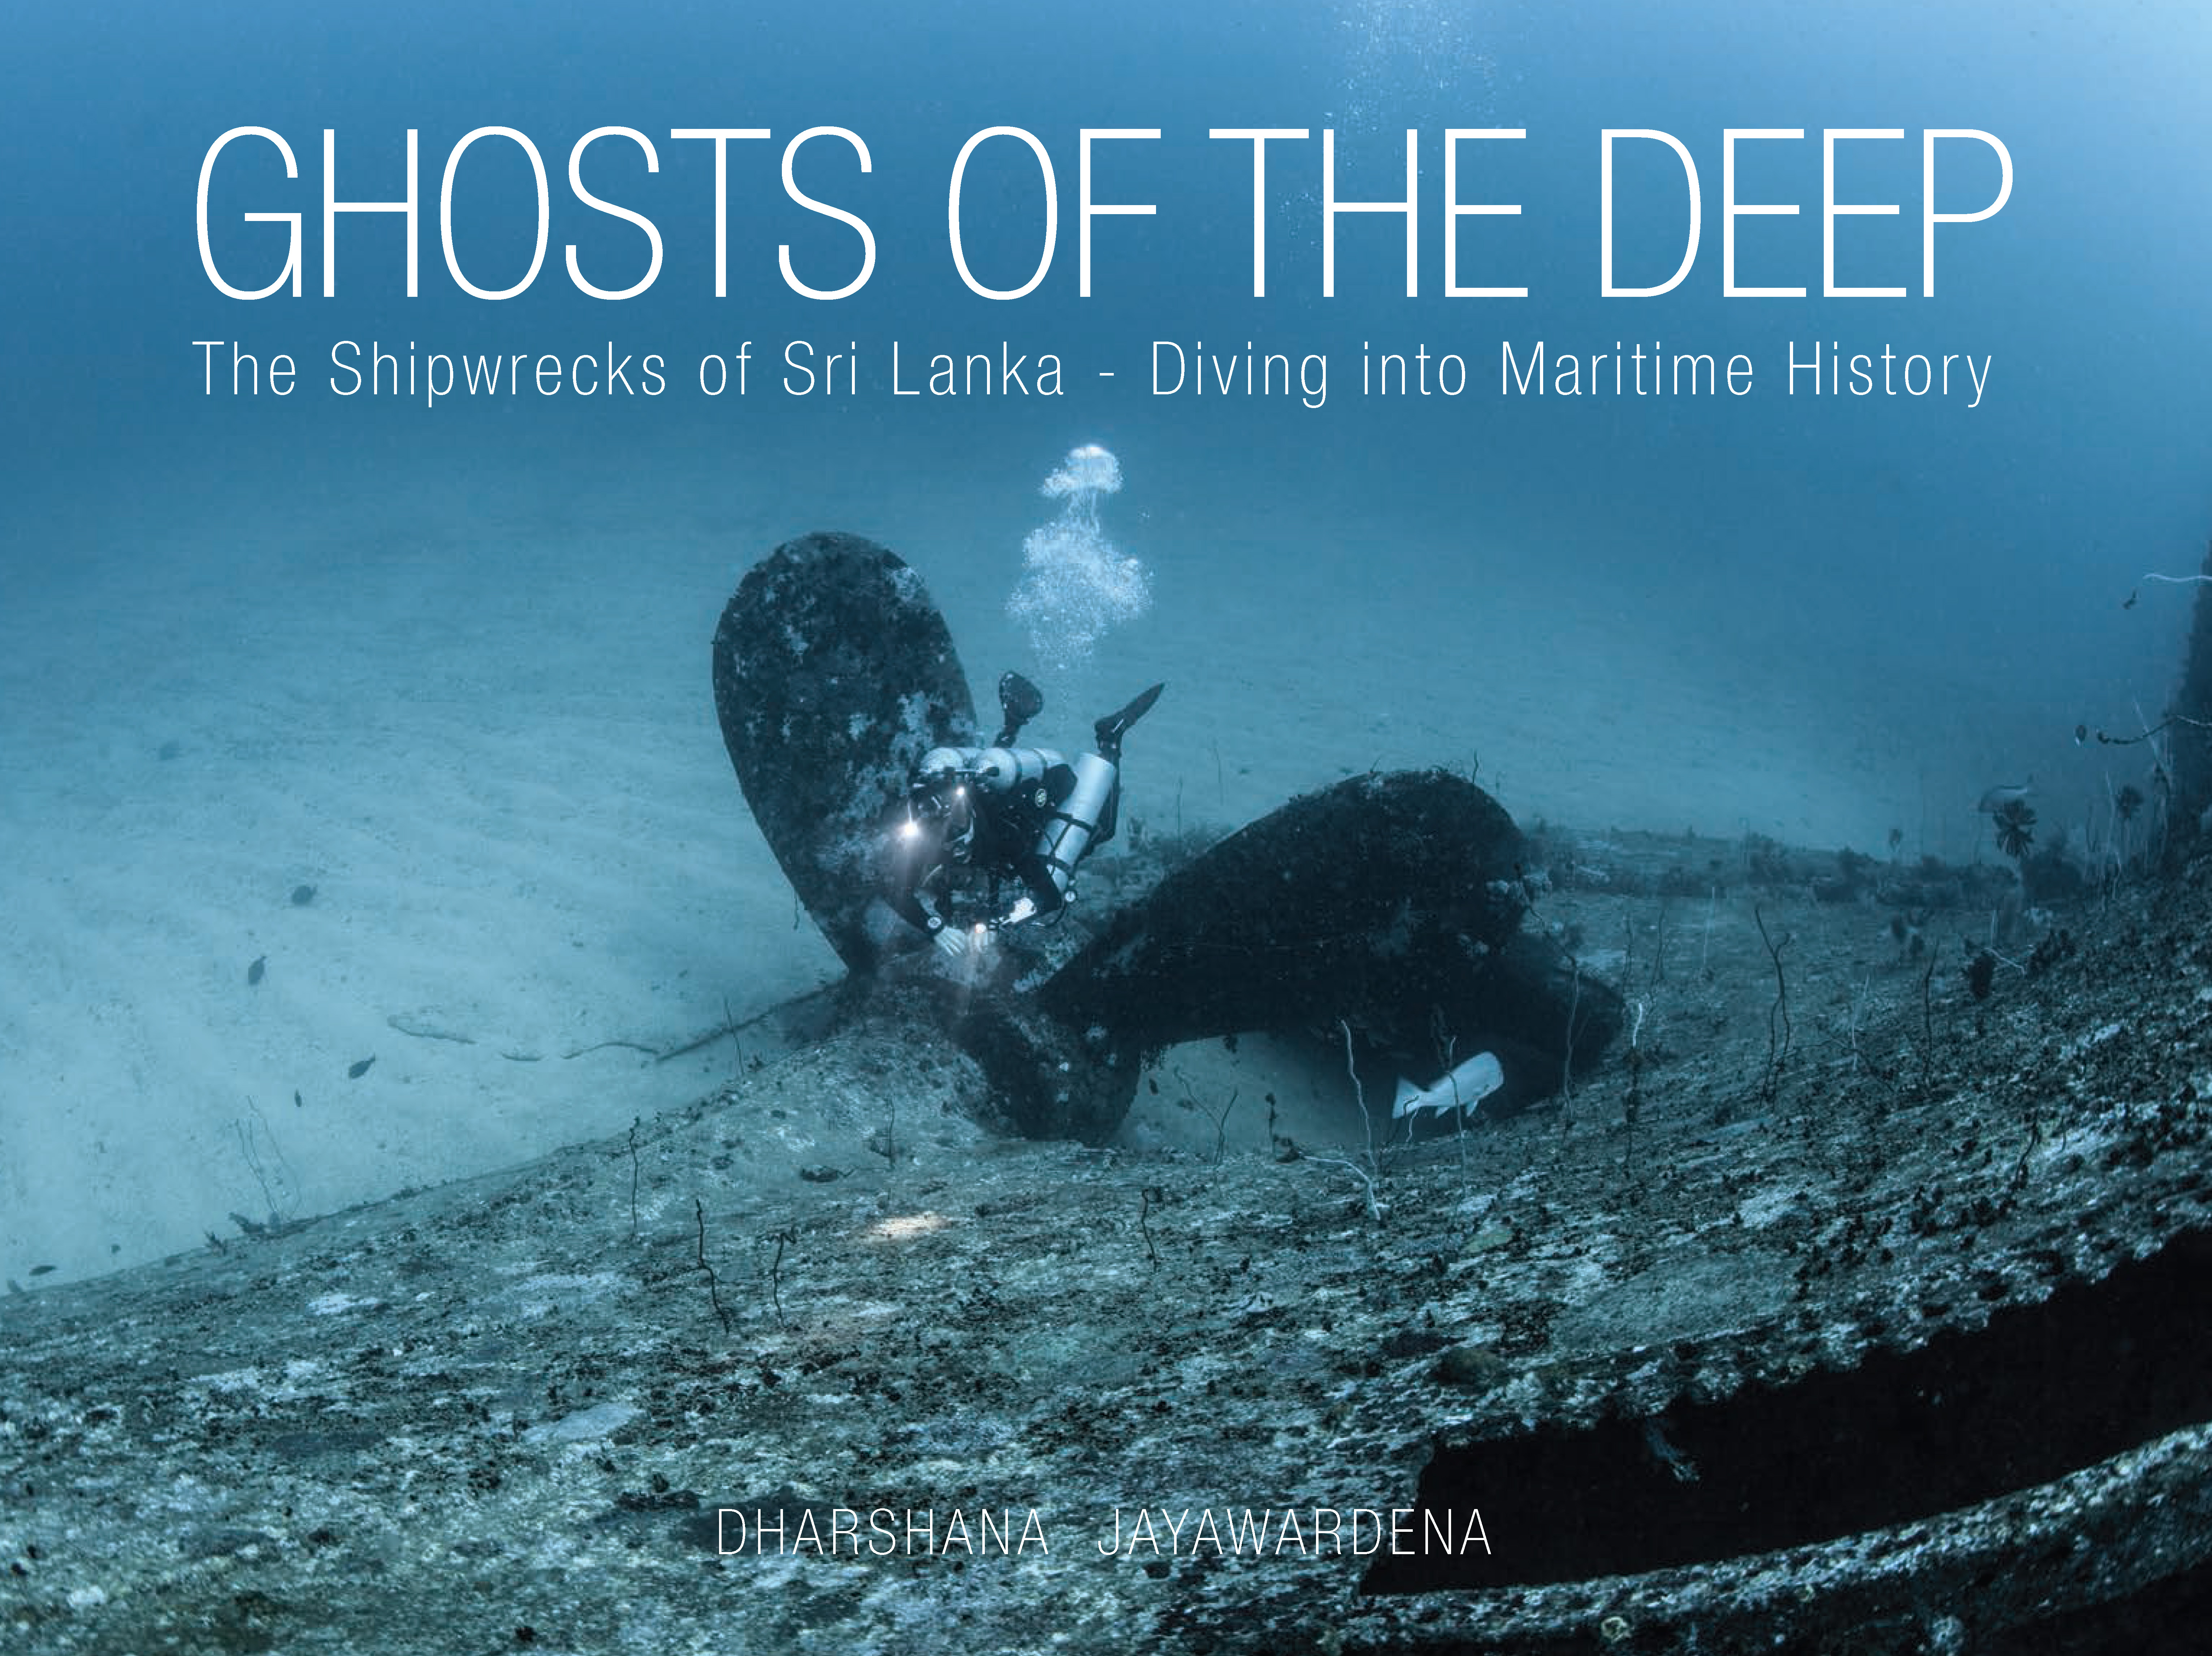 Ghosts of the deep : The Shipwrecks of Sri Lanka 